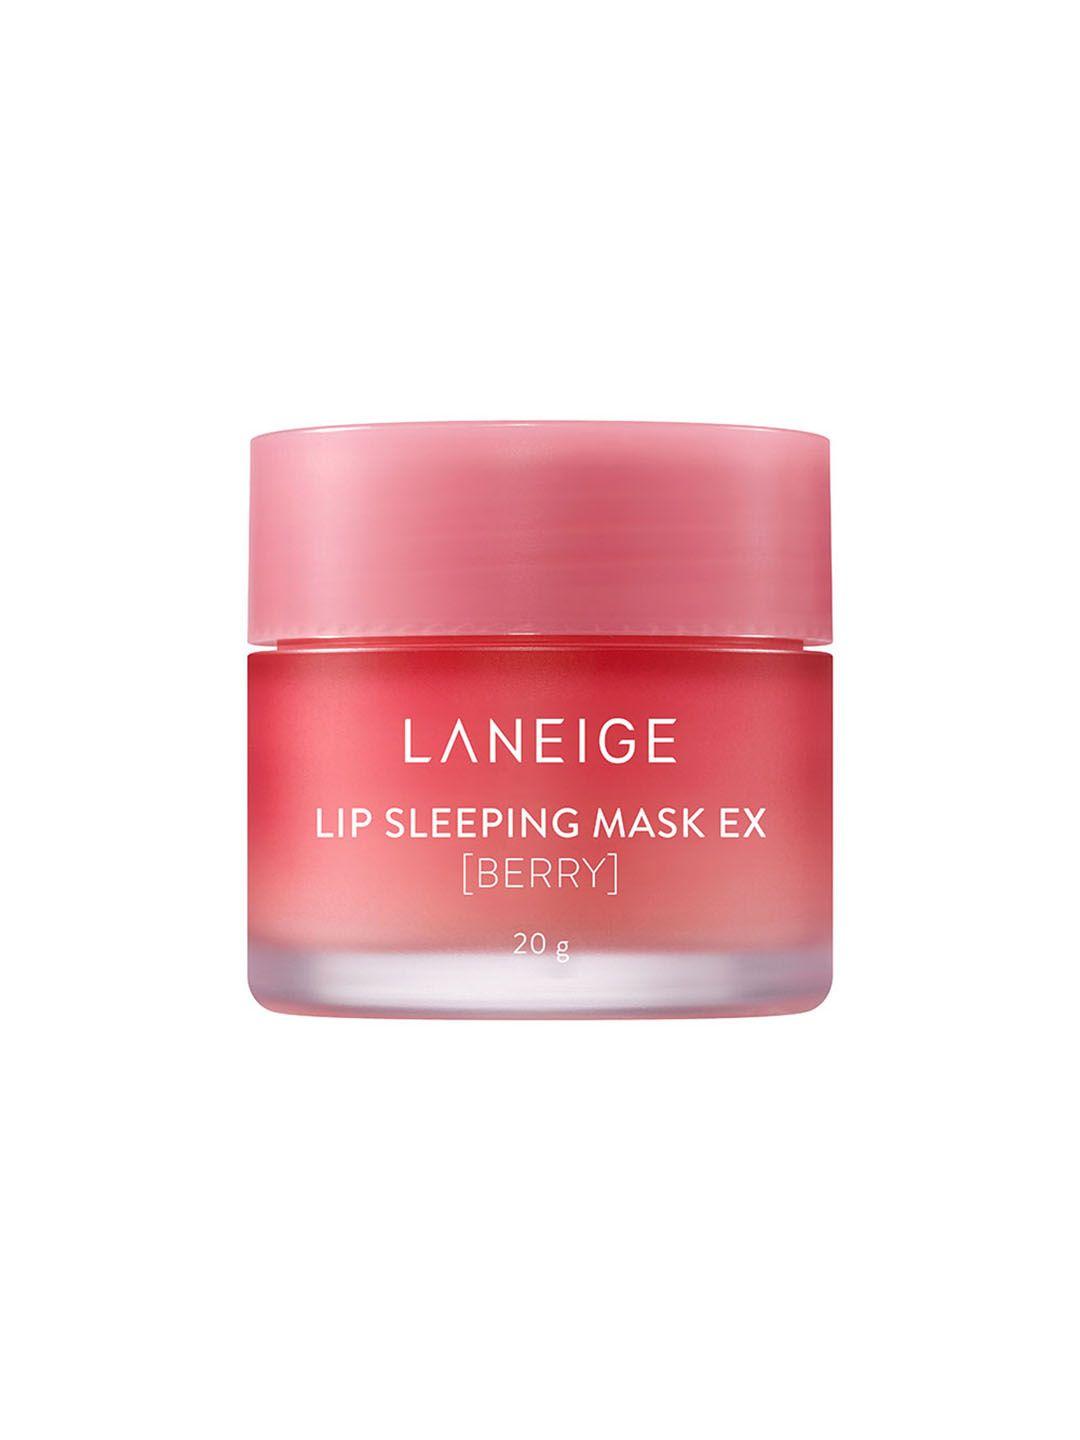 laneige-lip-sleeping-mask-ex-20-g---berry